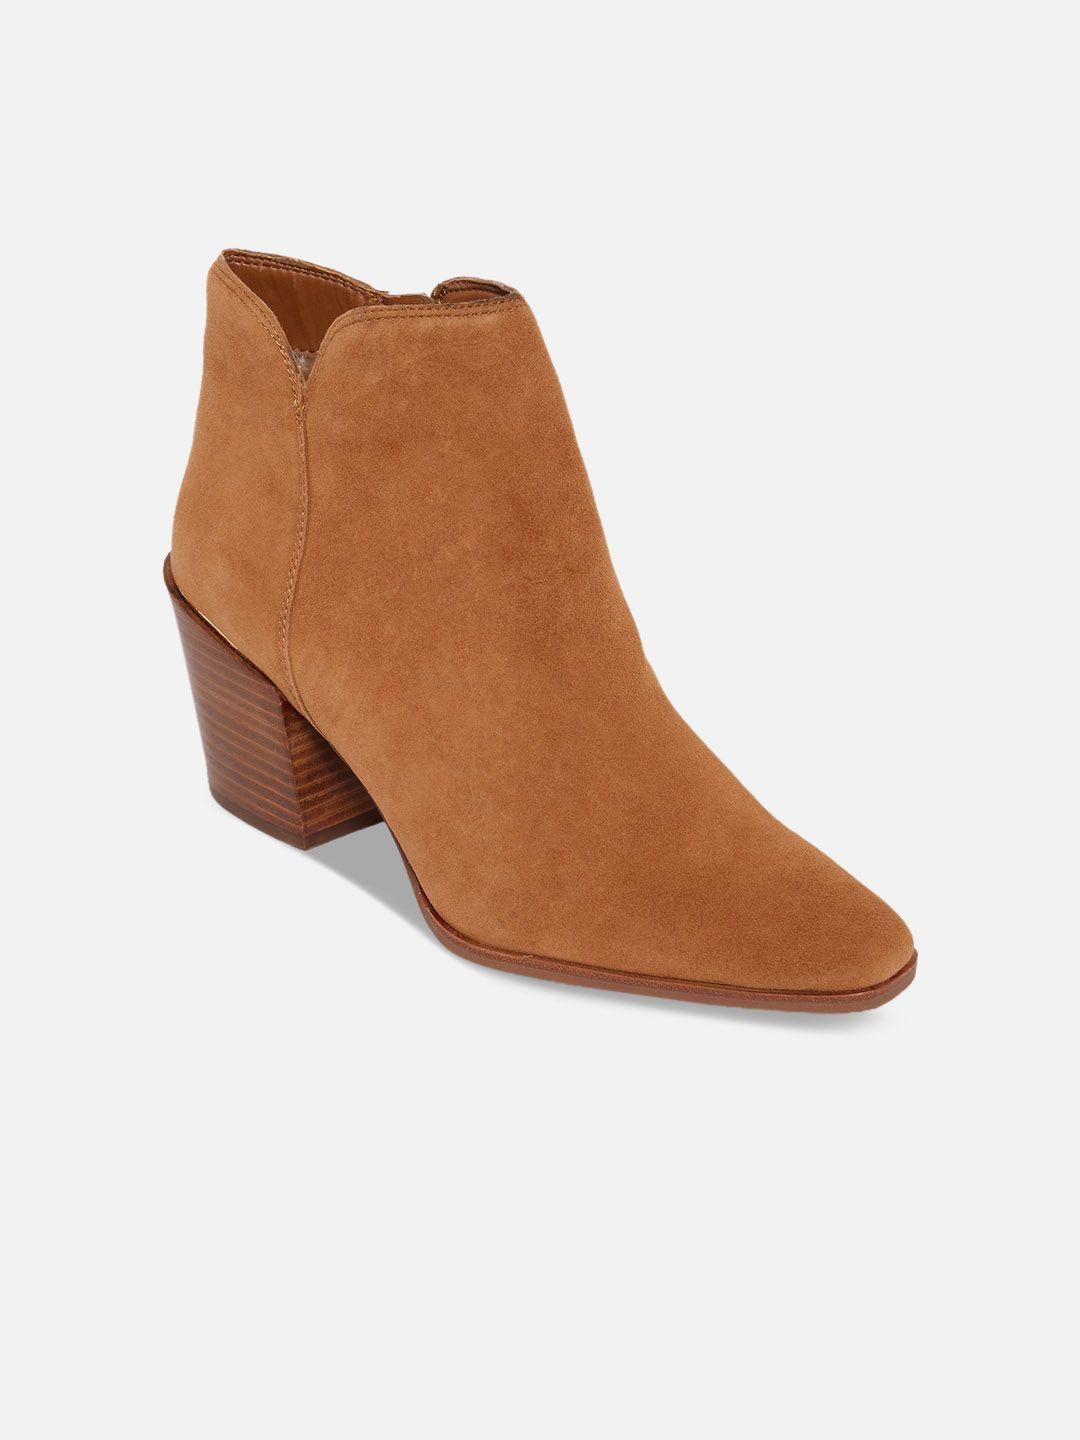 aldo women brown leather flat boots